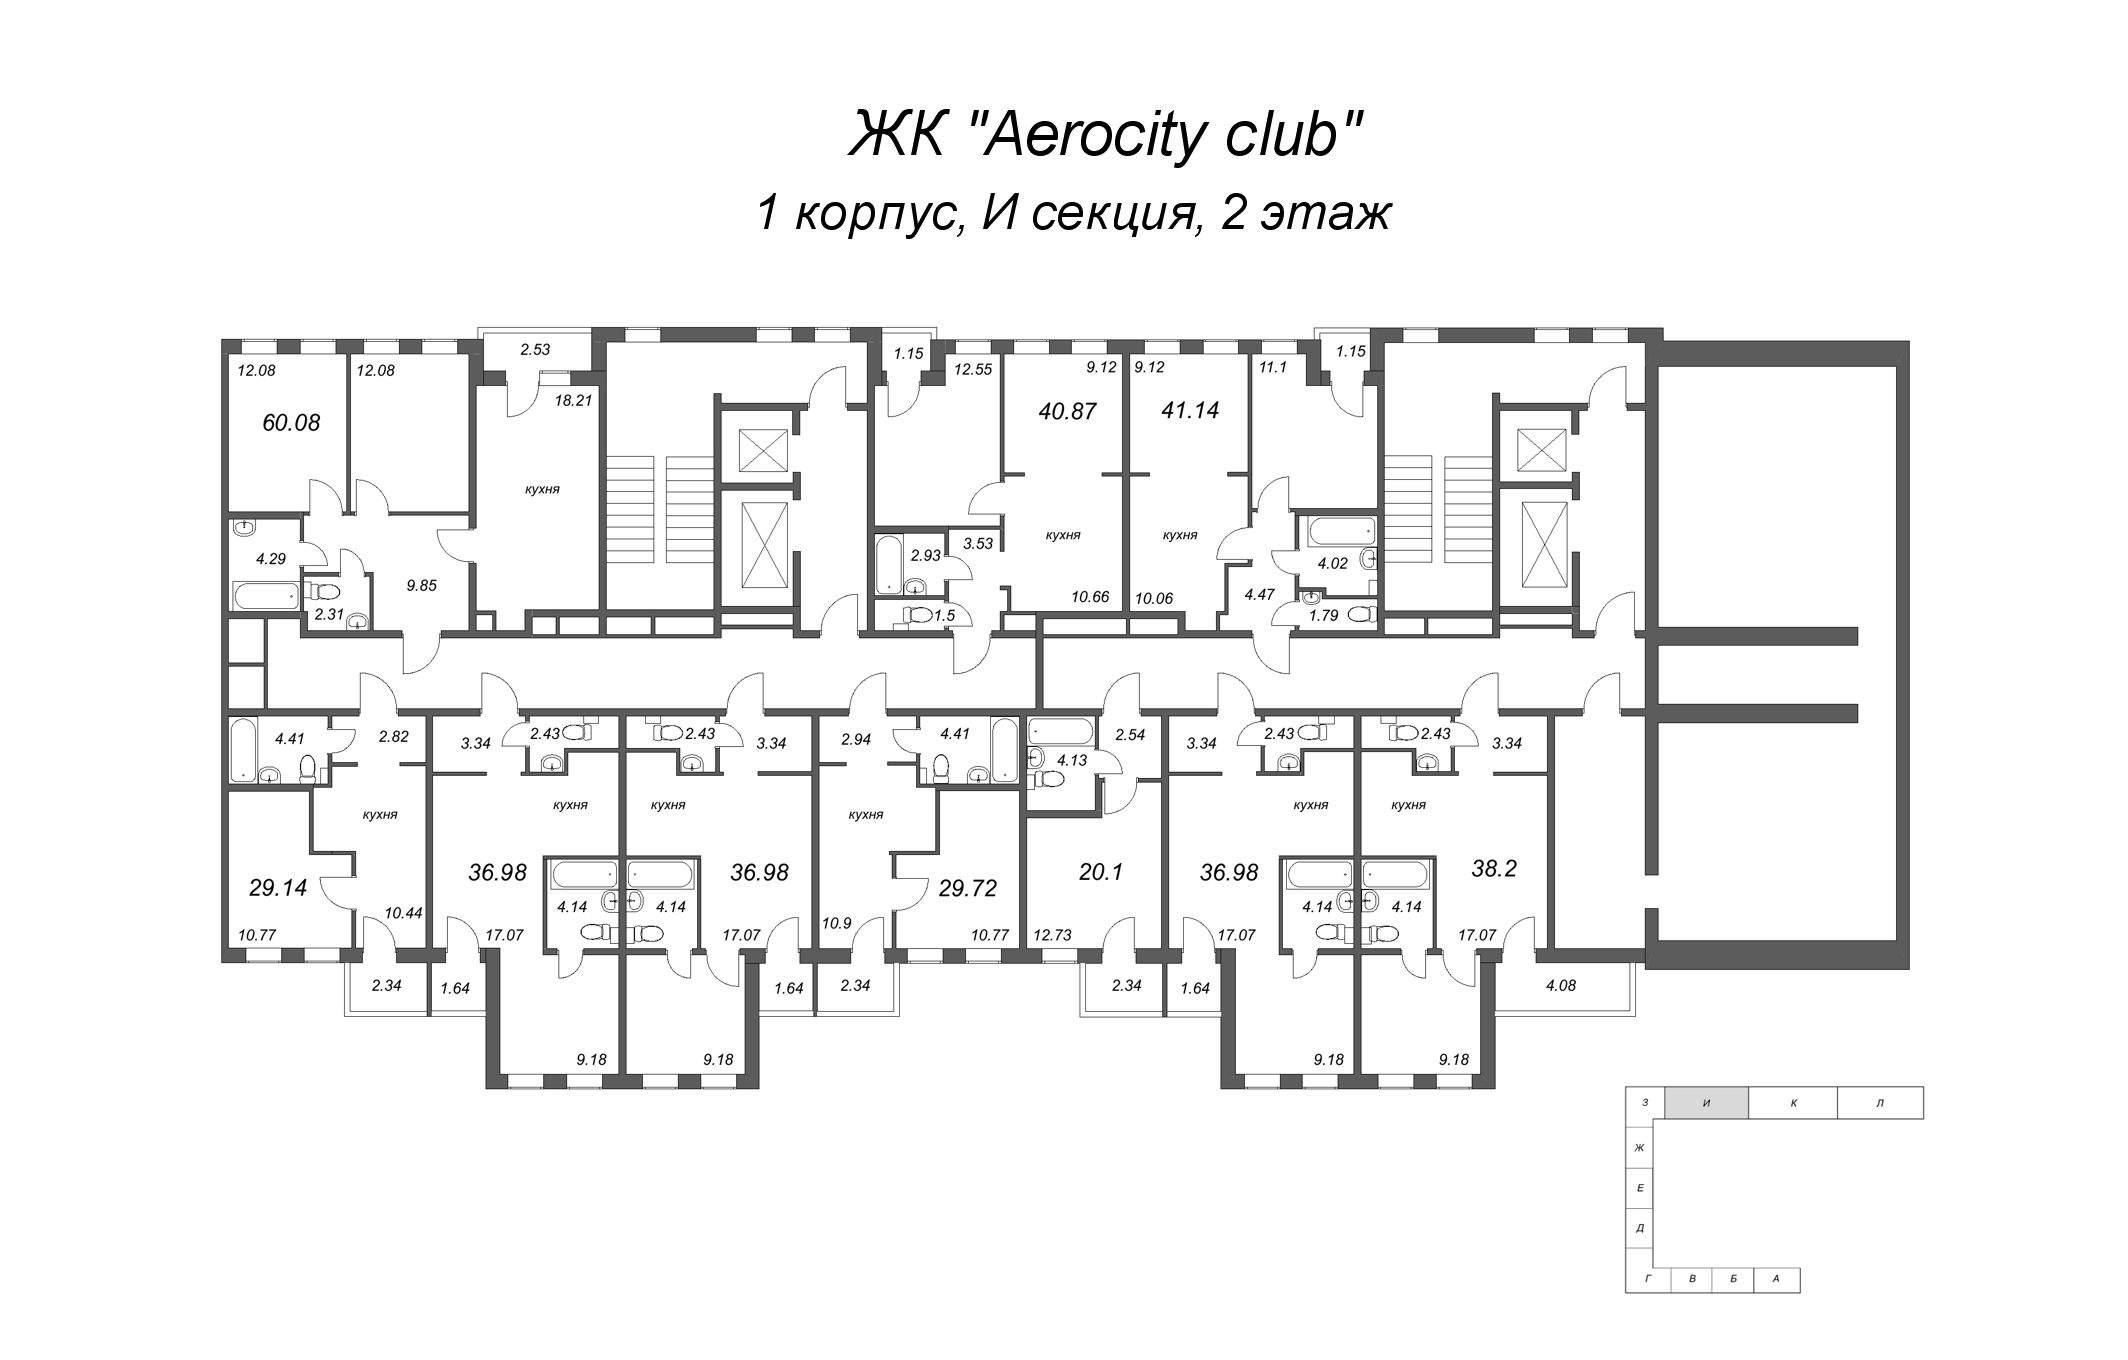 2-комнатная (Евро) квартира, 36.98 м² - планировка этажа